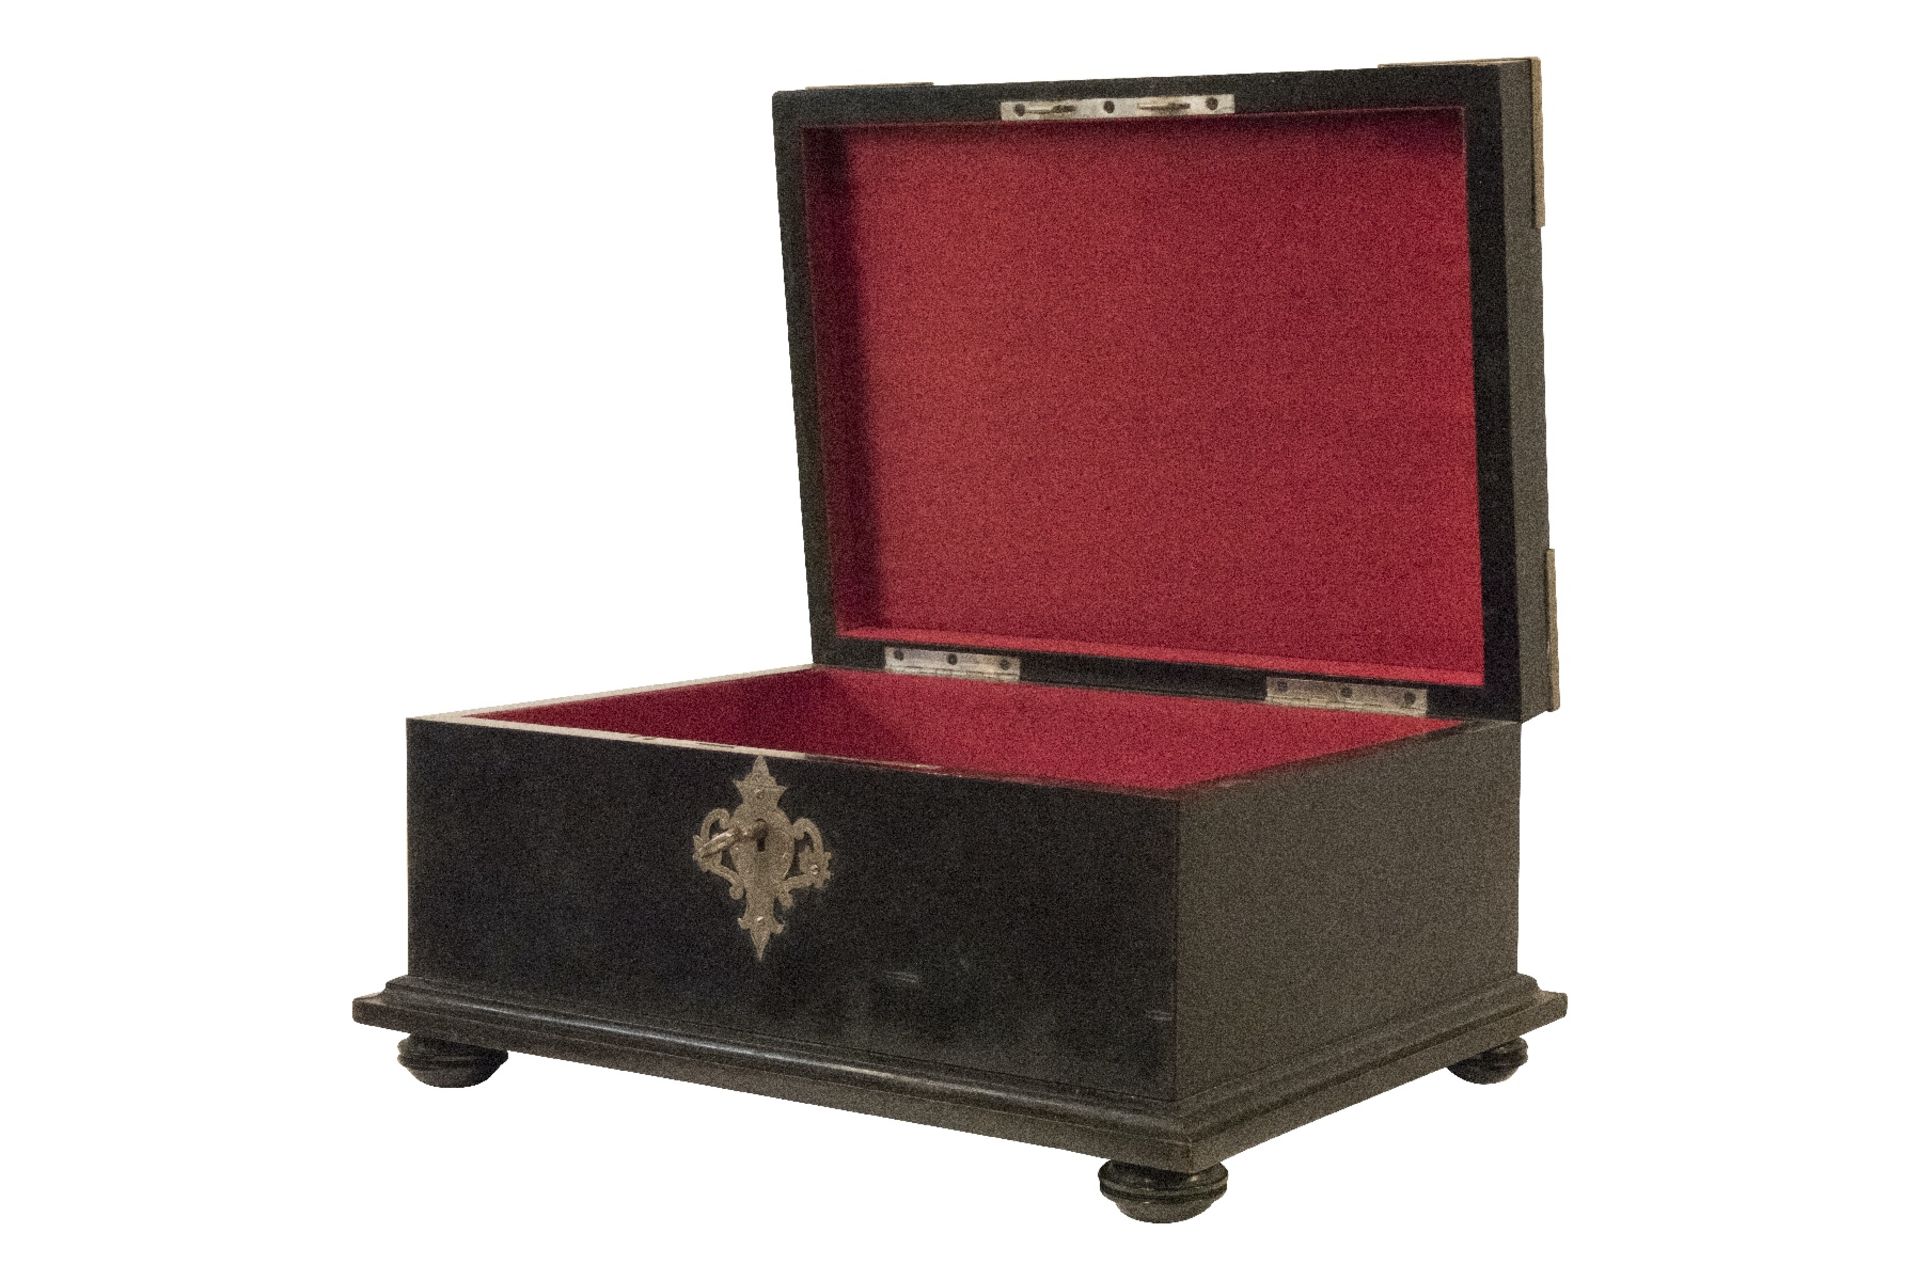 Holzschatulle mit Metallbeschlaegen | Wooden casket with metal fittings